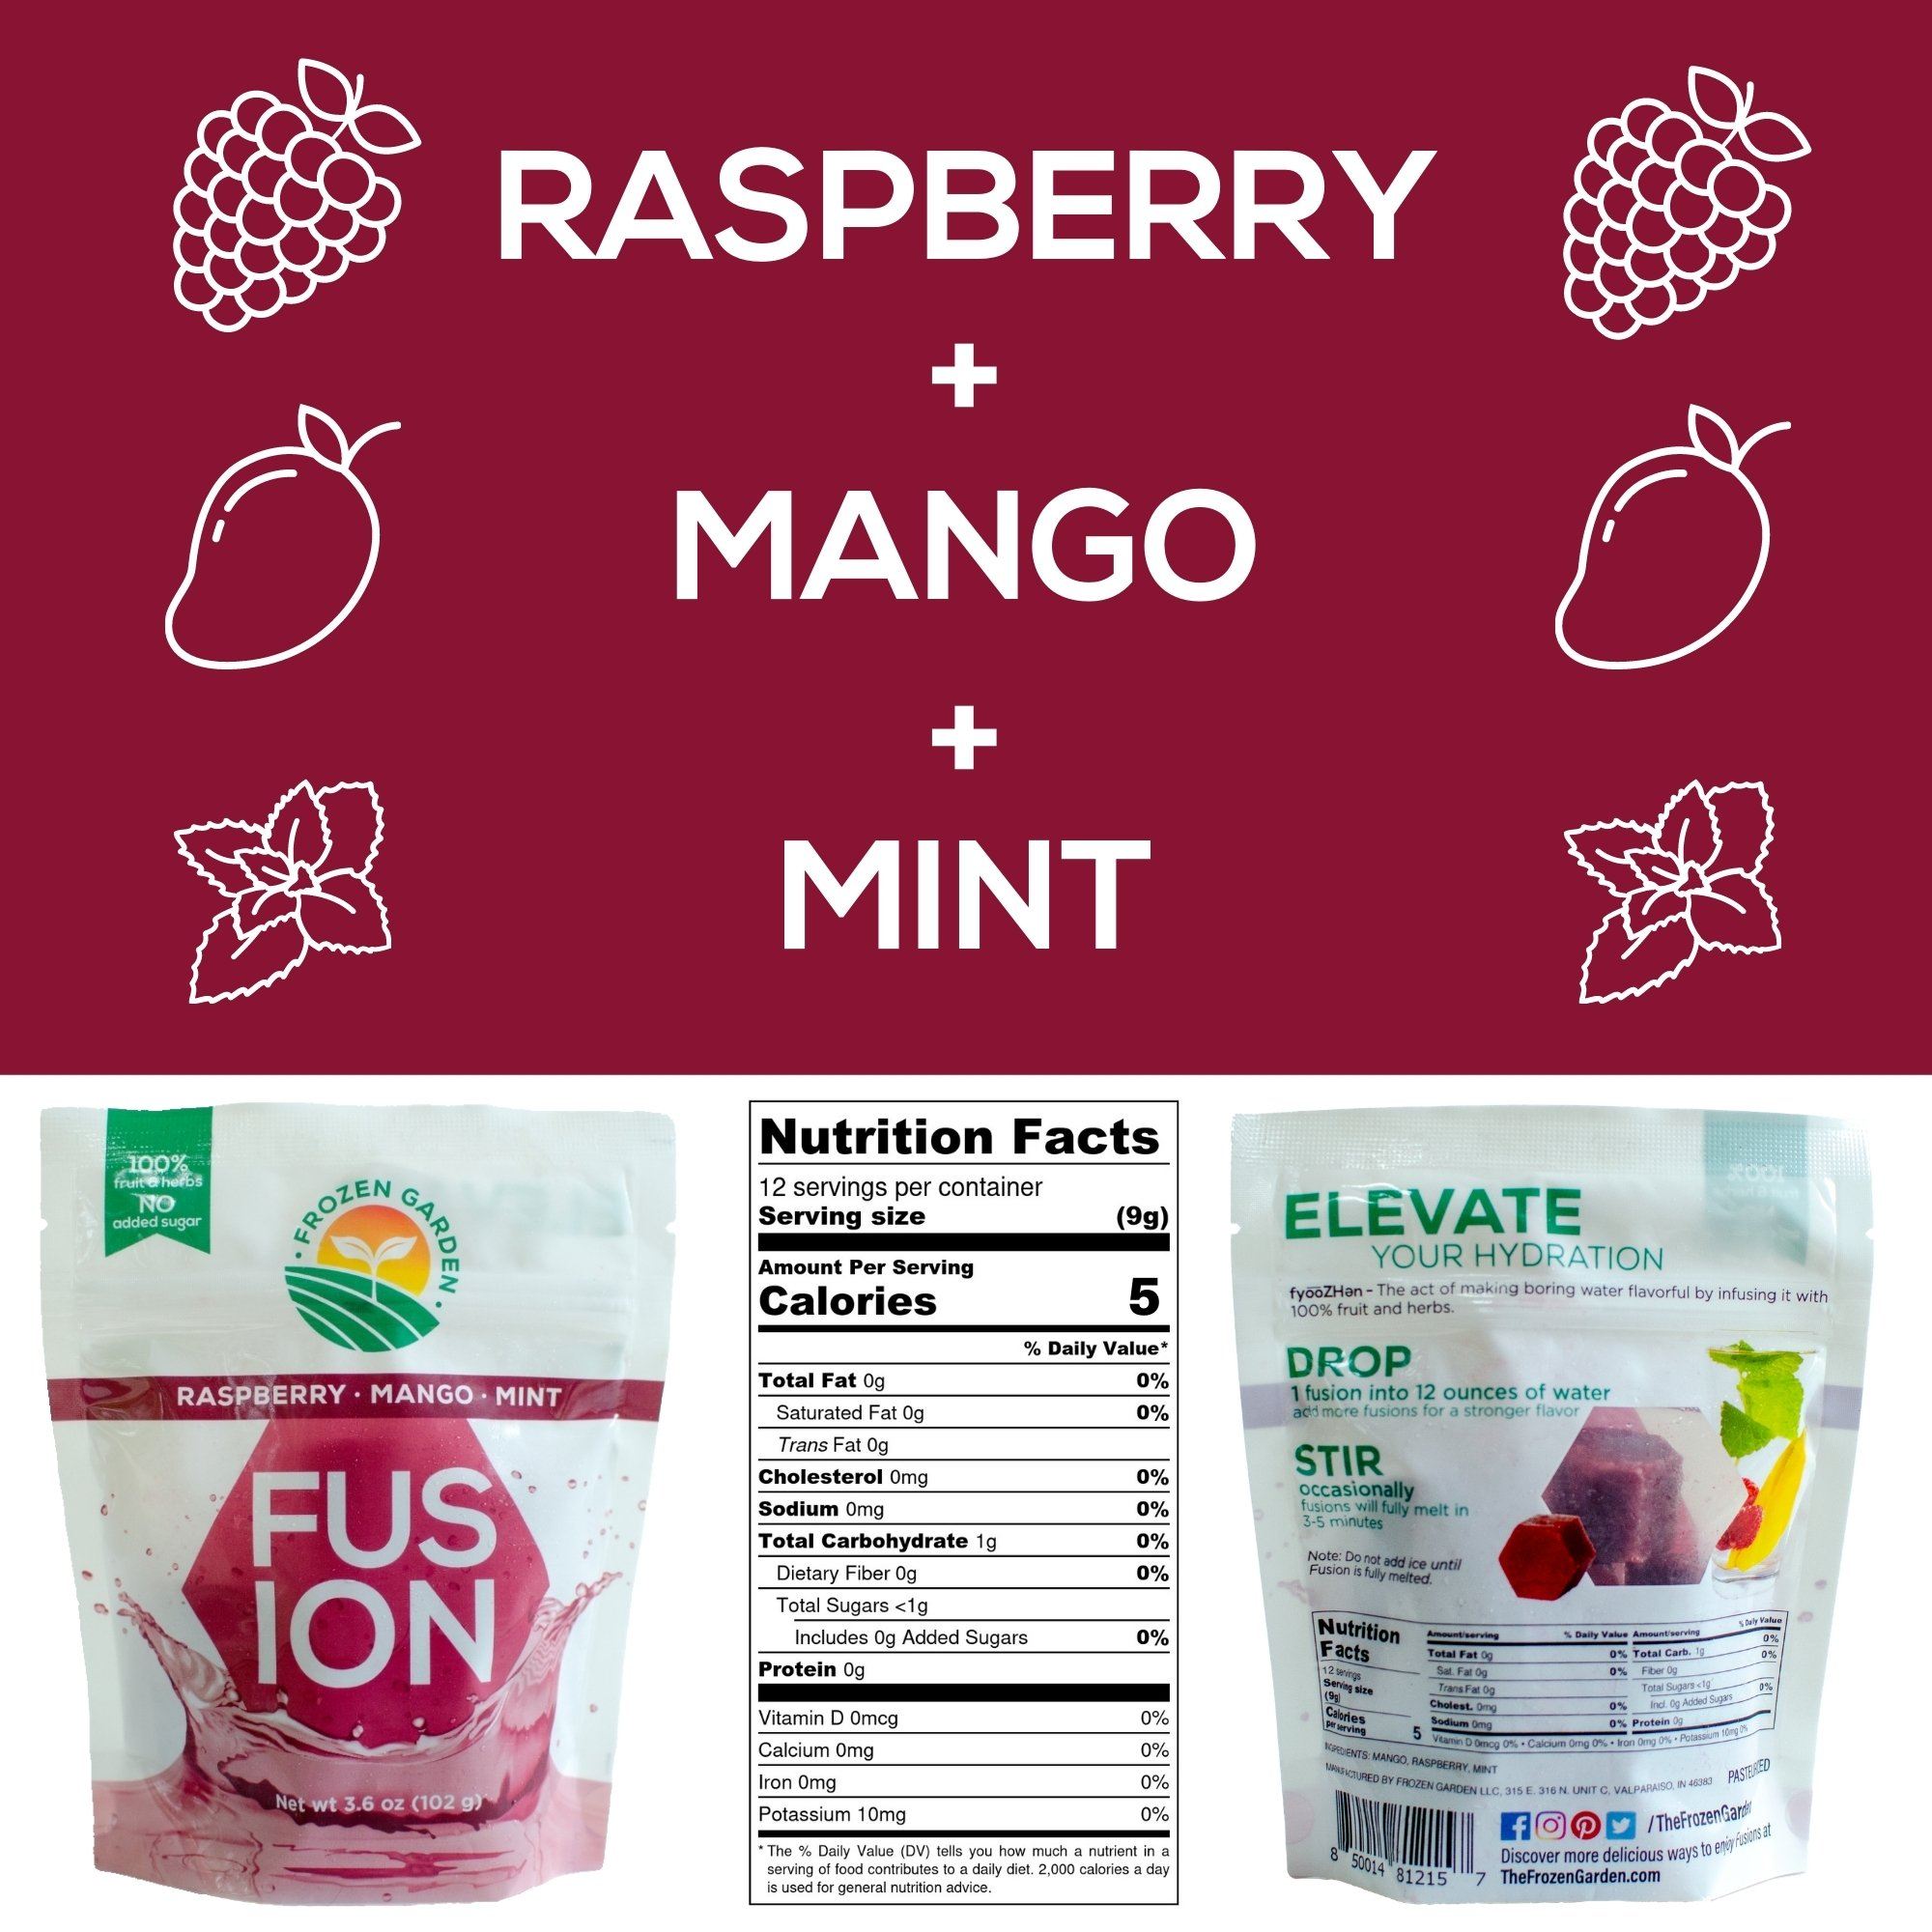 Raspberry + Mango + Mint.